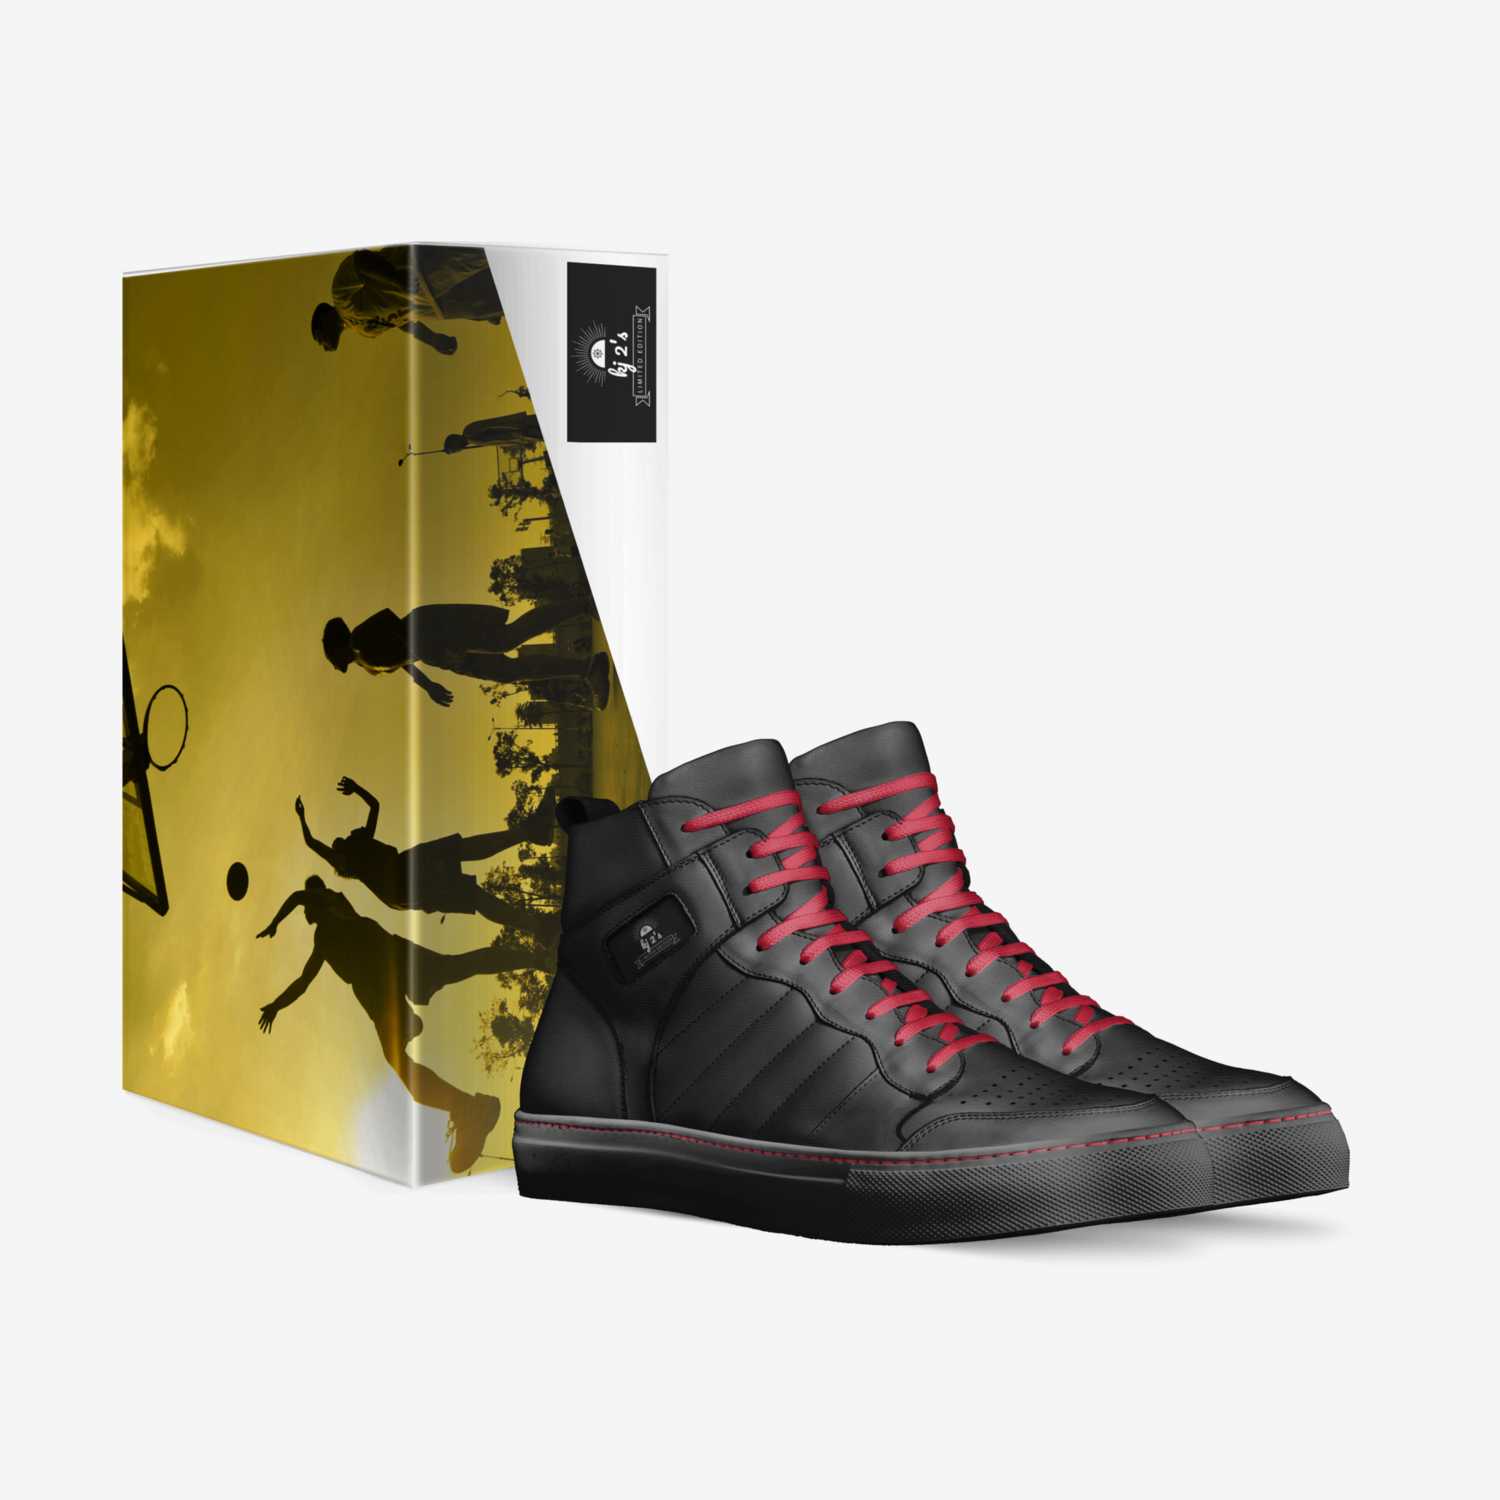 kj 2's custom made in Italy shoes by Kadden Shifflett | Box view